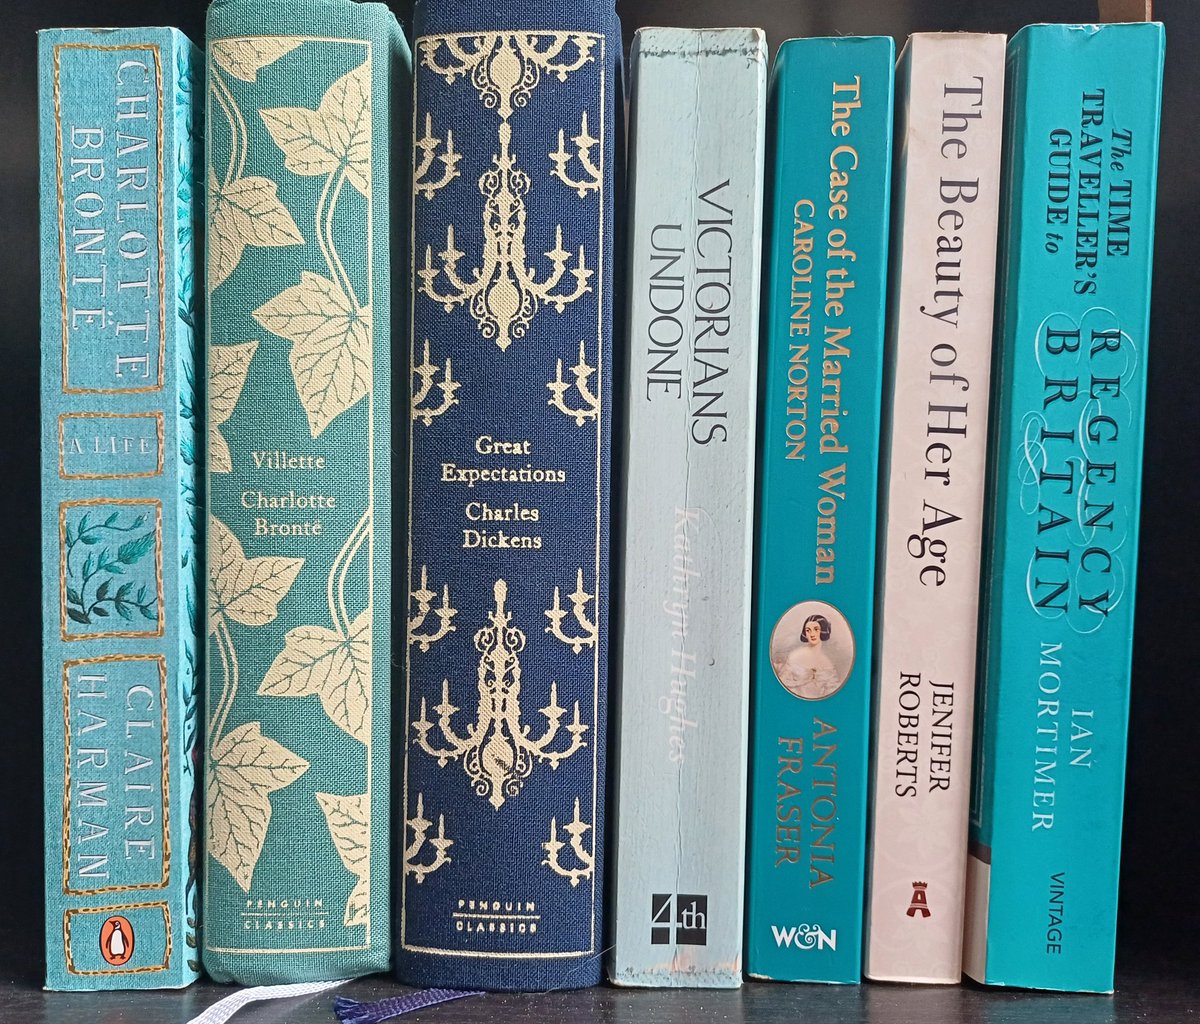 Bit of bookshelf colour coordination 💙 @claire_harman #CharlotteBronte #CharlesDickens #KathrynHughes #AntoniaFraser #JeniferRoberts @IanJamesFM